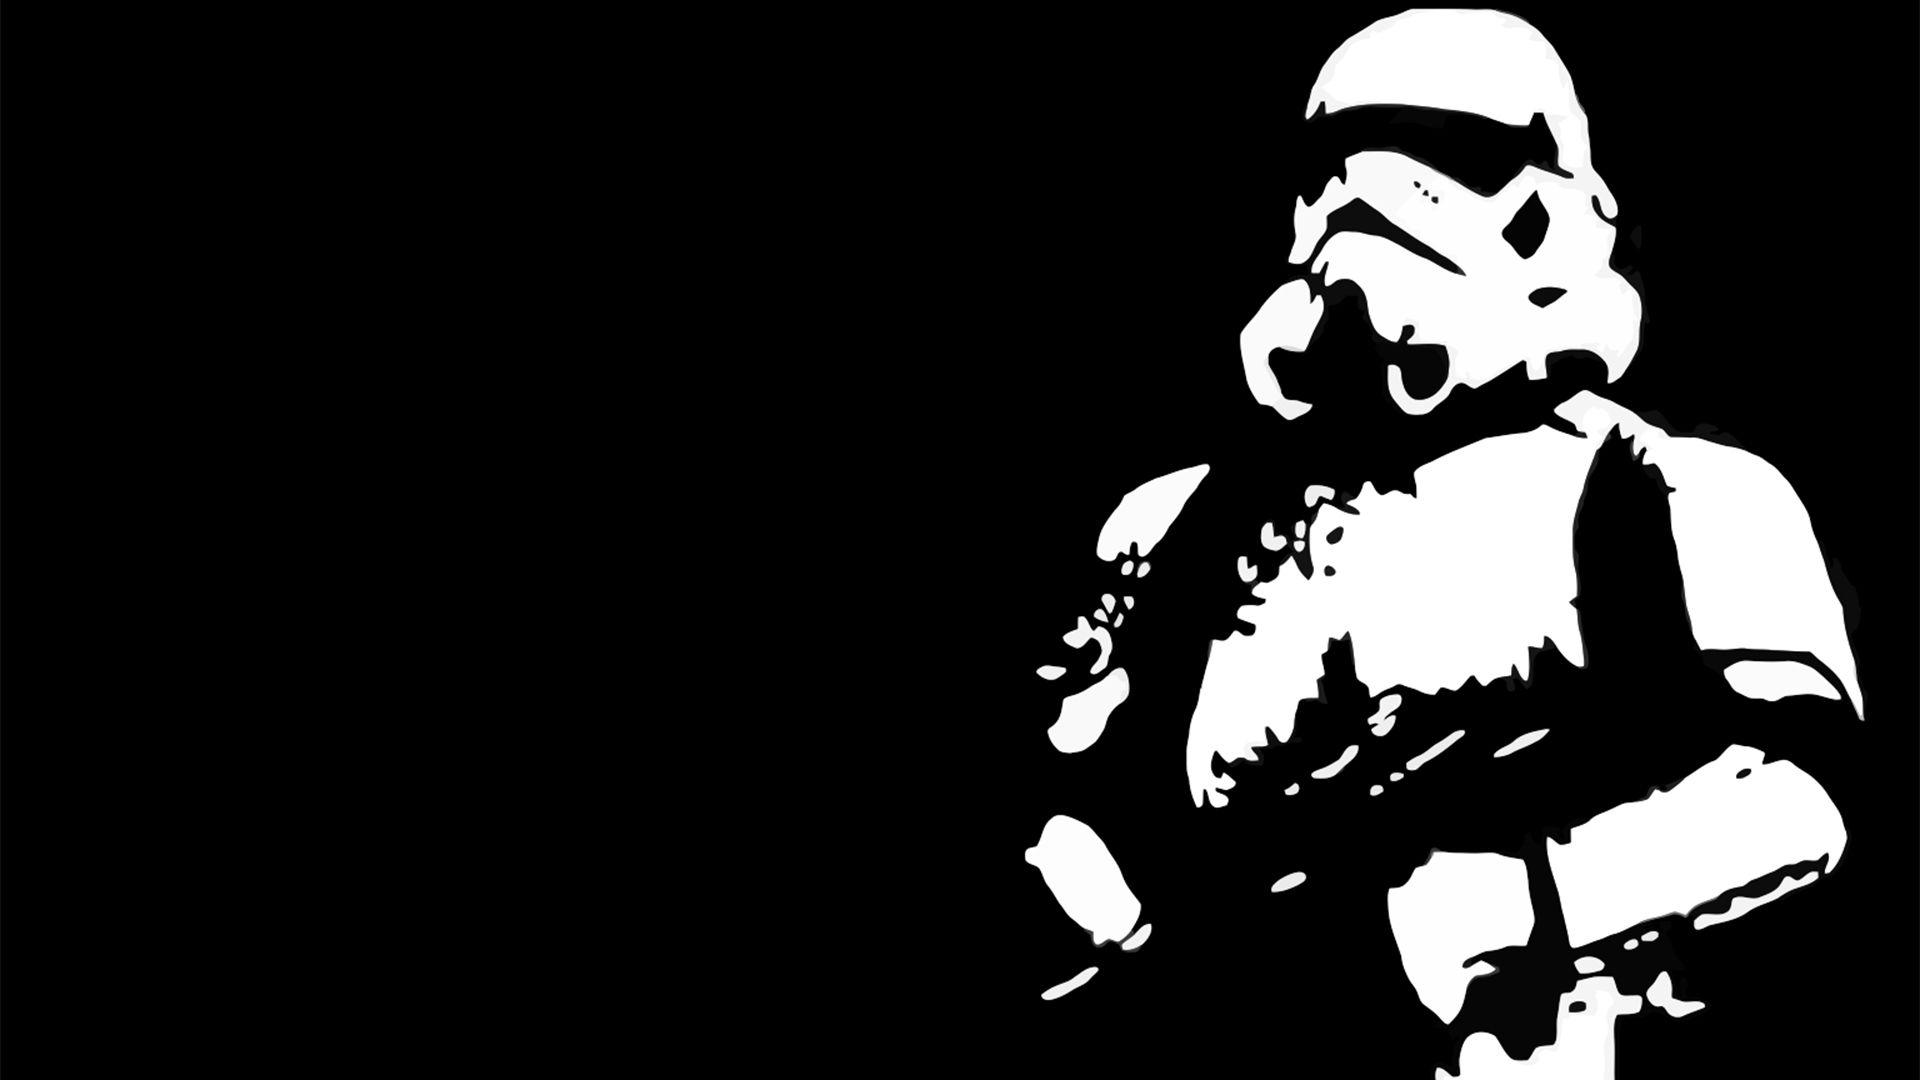 Stormtrooper Wallpaper, PC Stormtrooper Stunning Photo D Screens